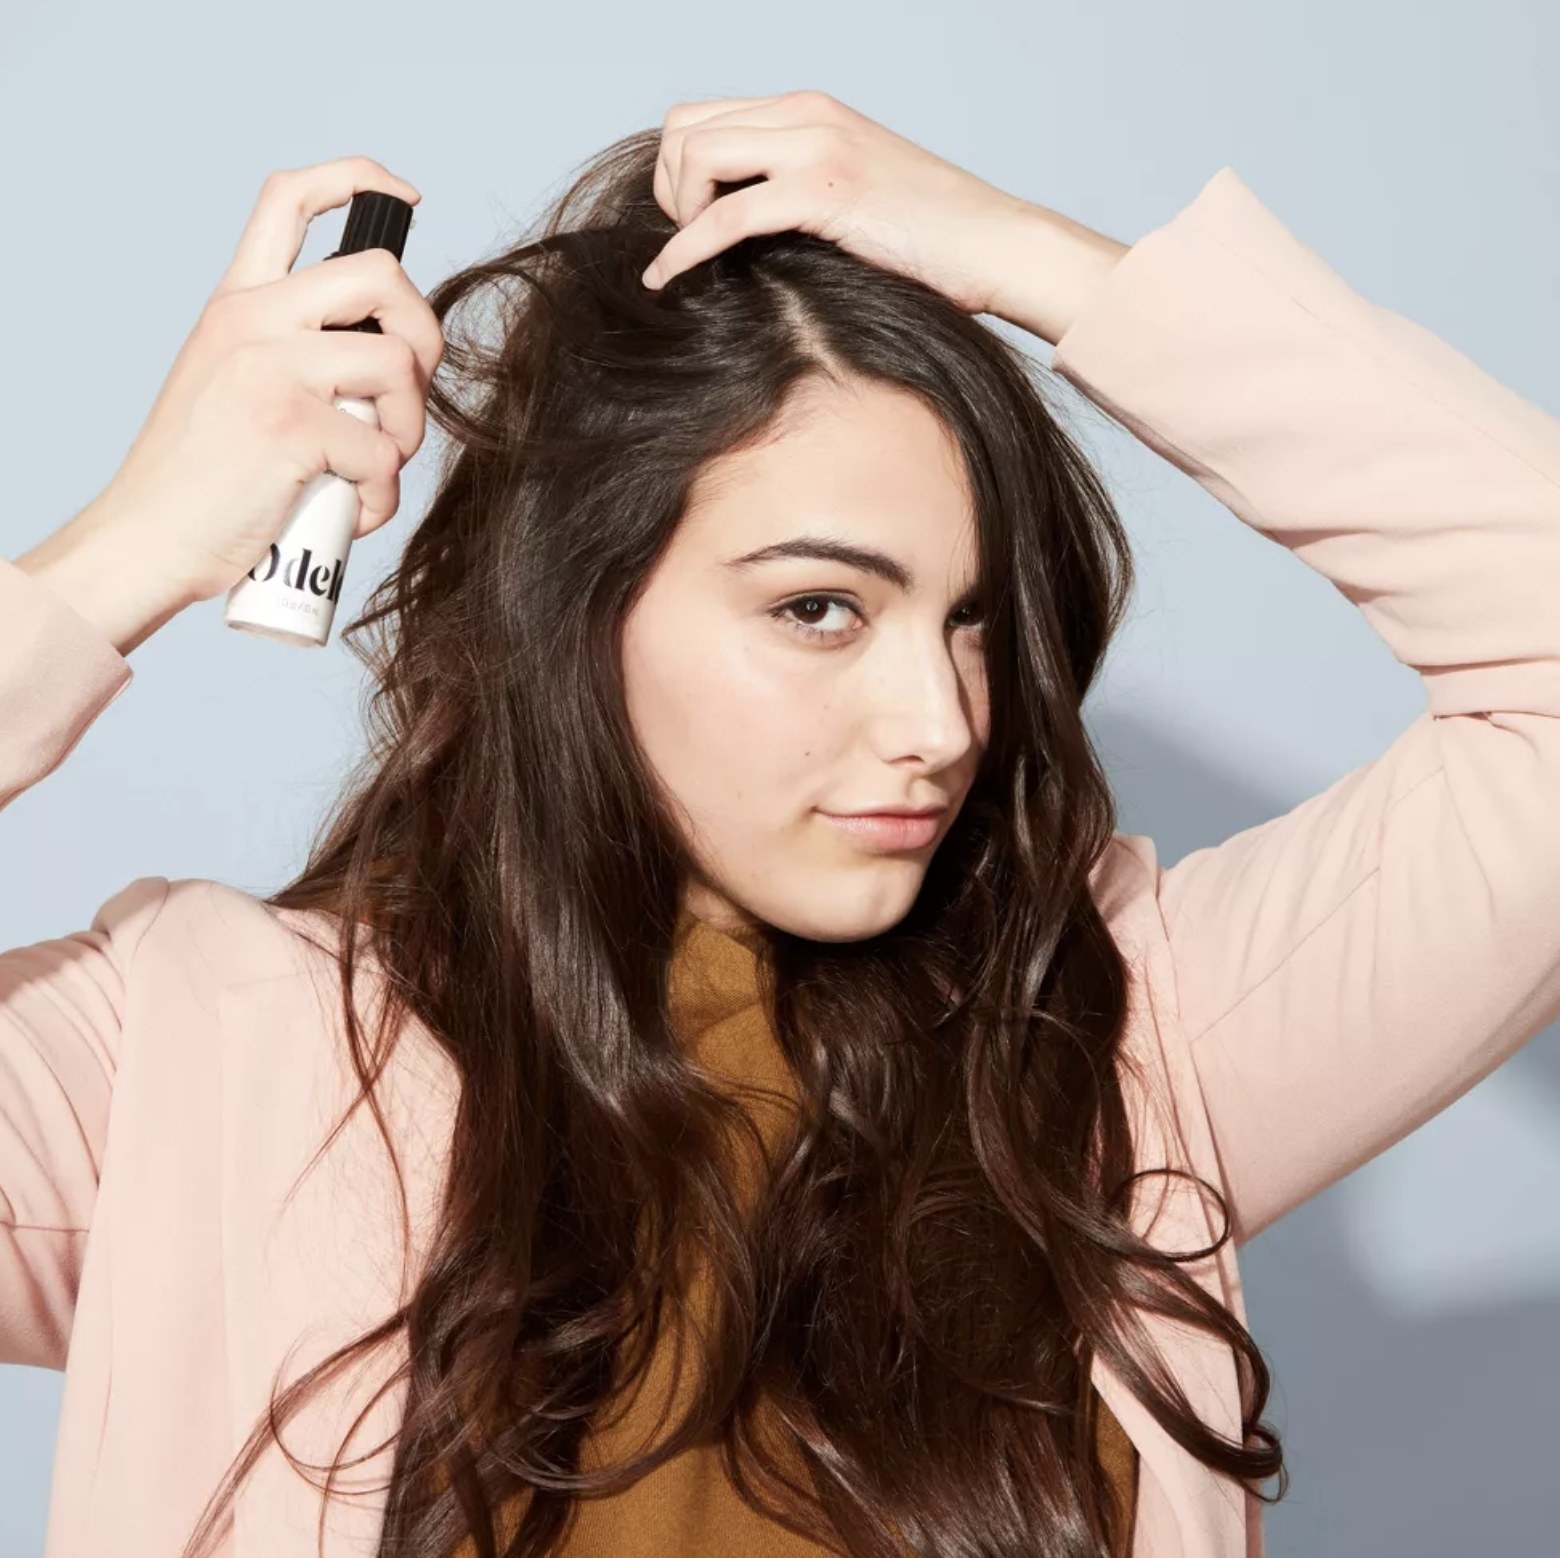 model using dry shampoo on her hair